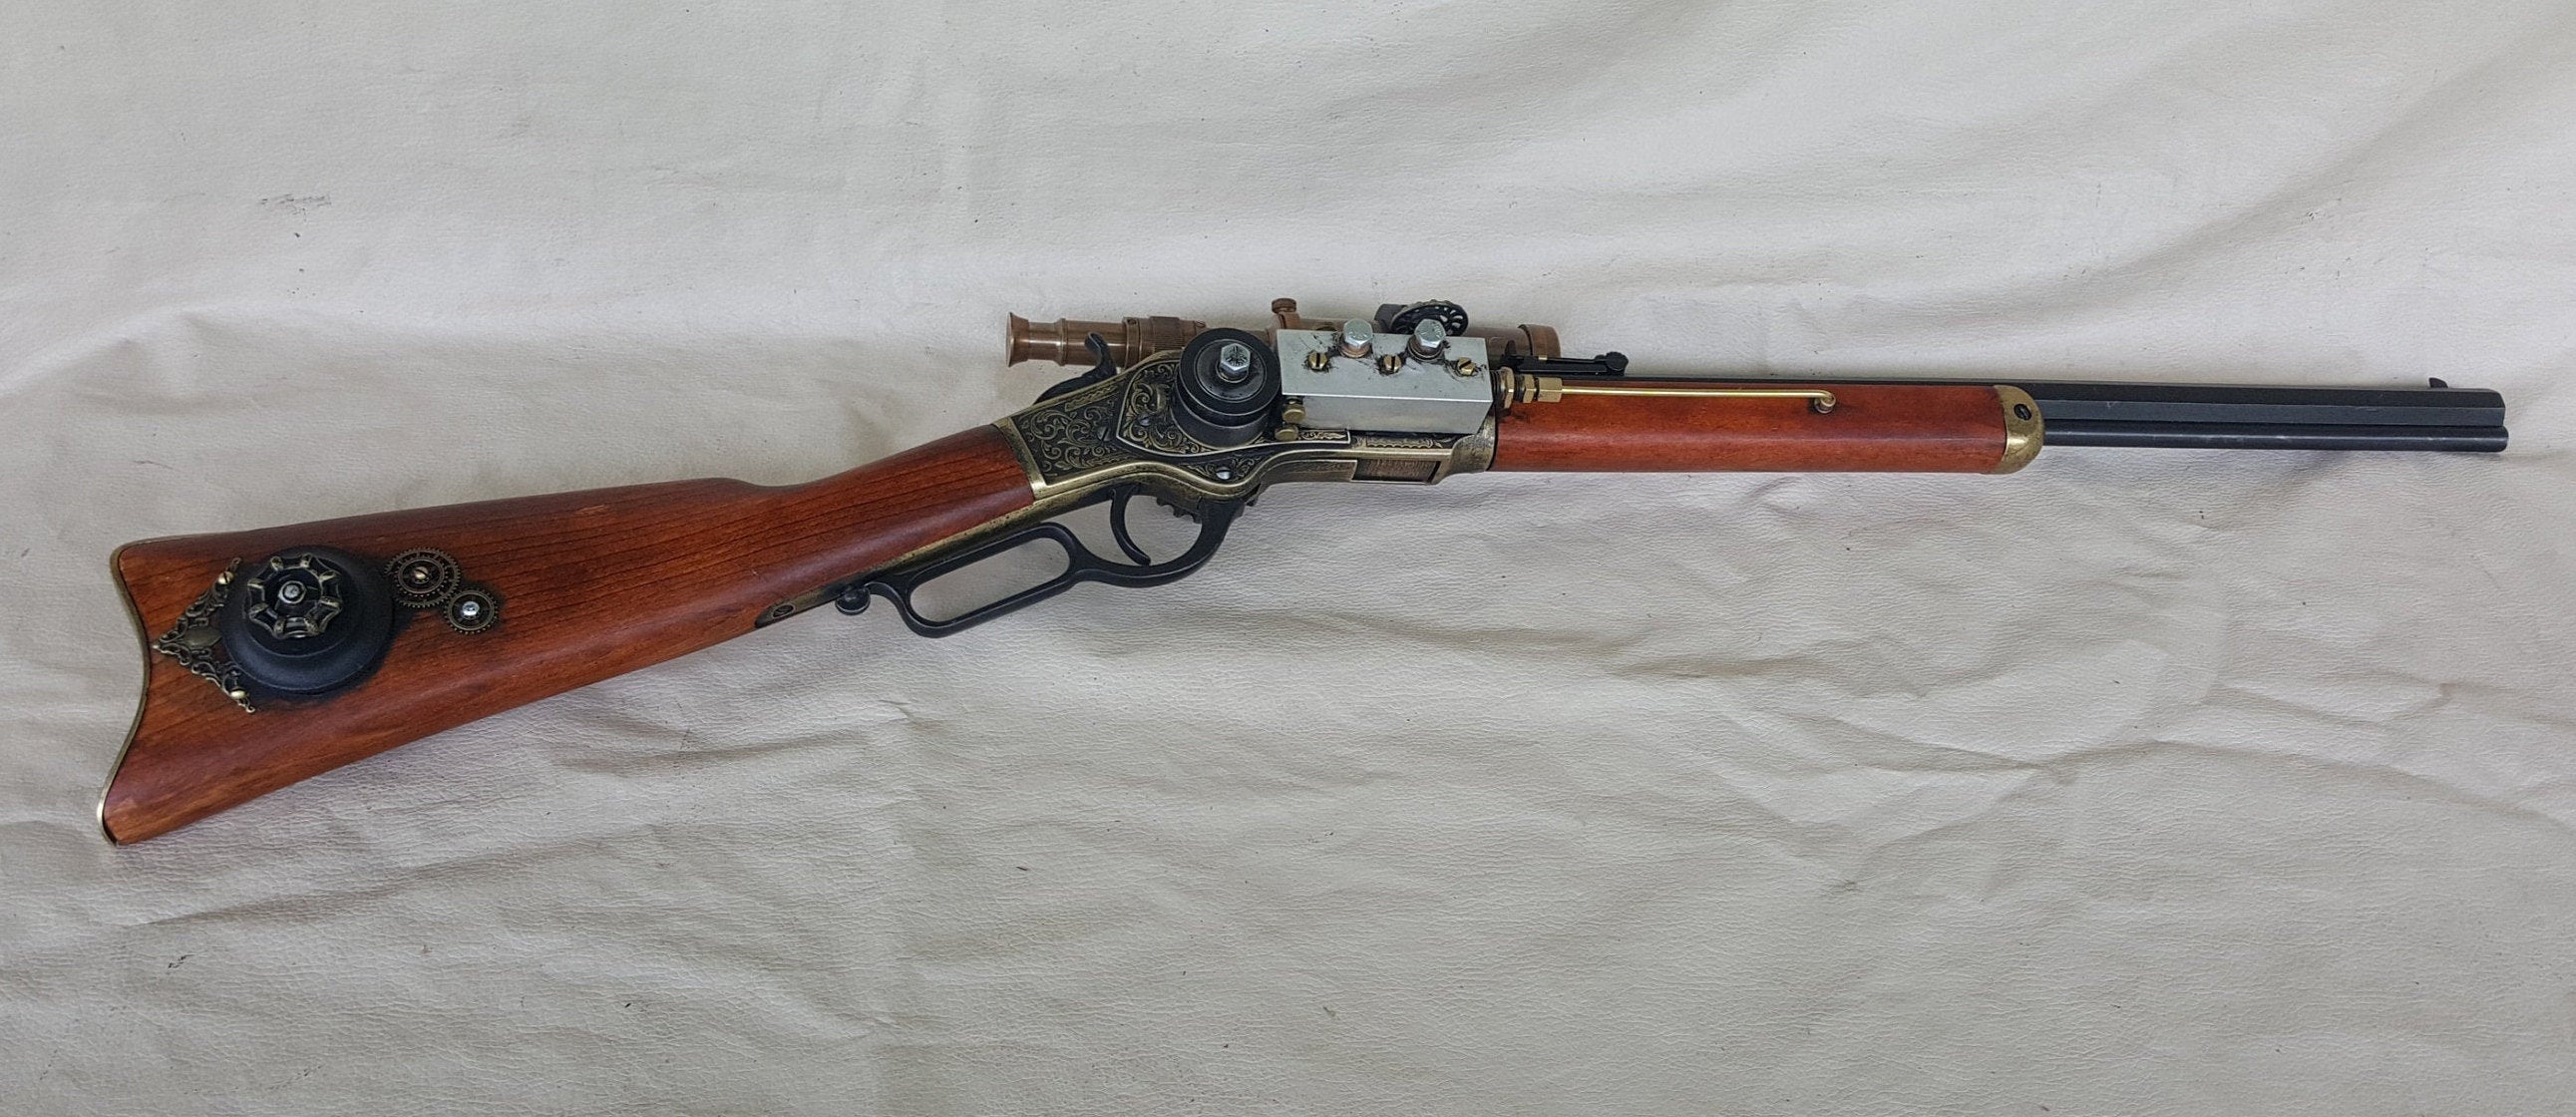 replica antique rifle scopes